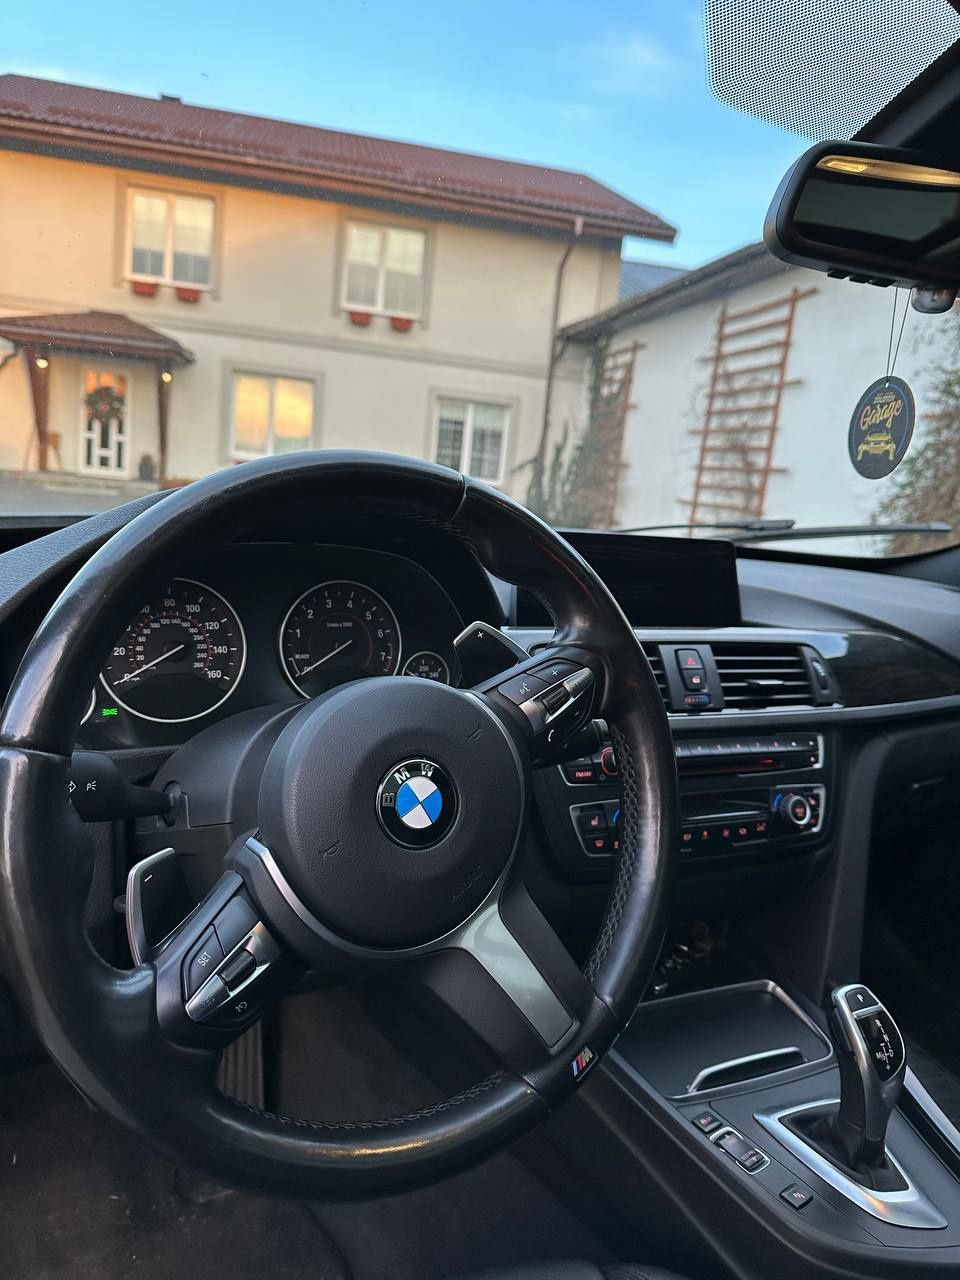 BMW GT 335i X-drive